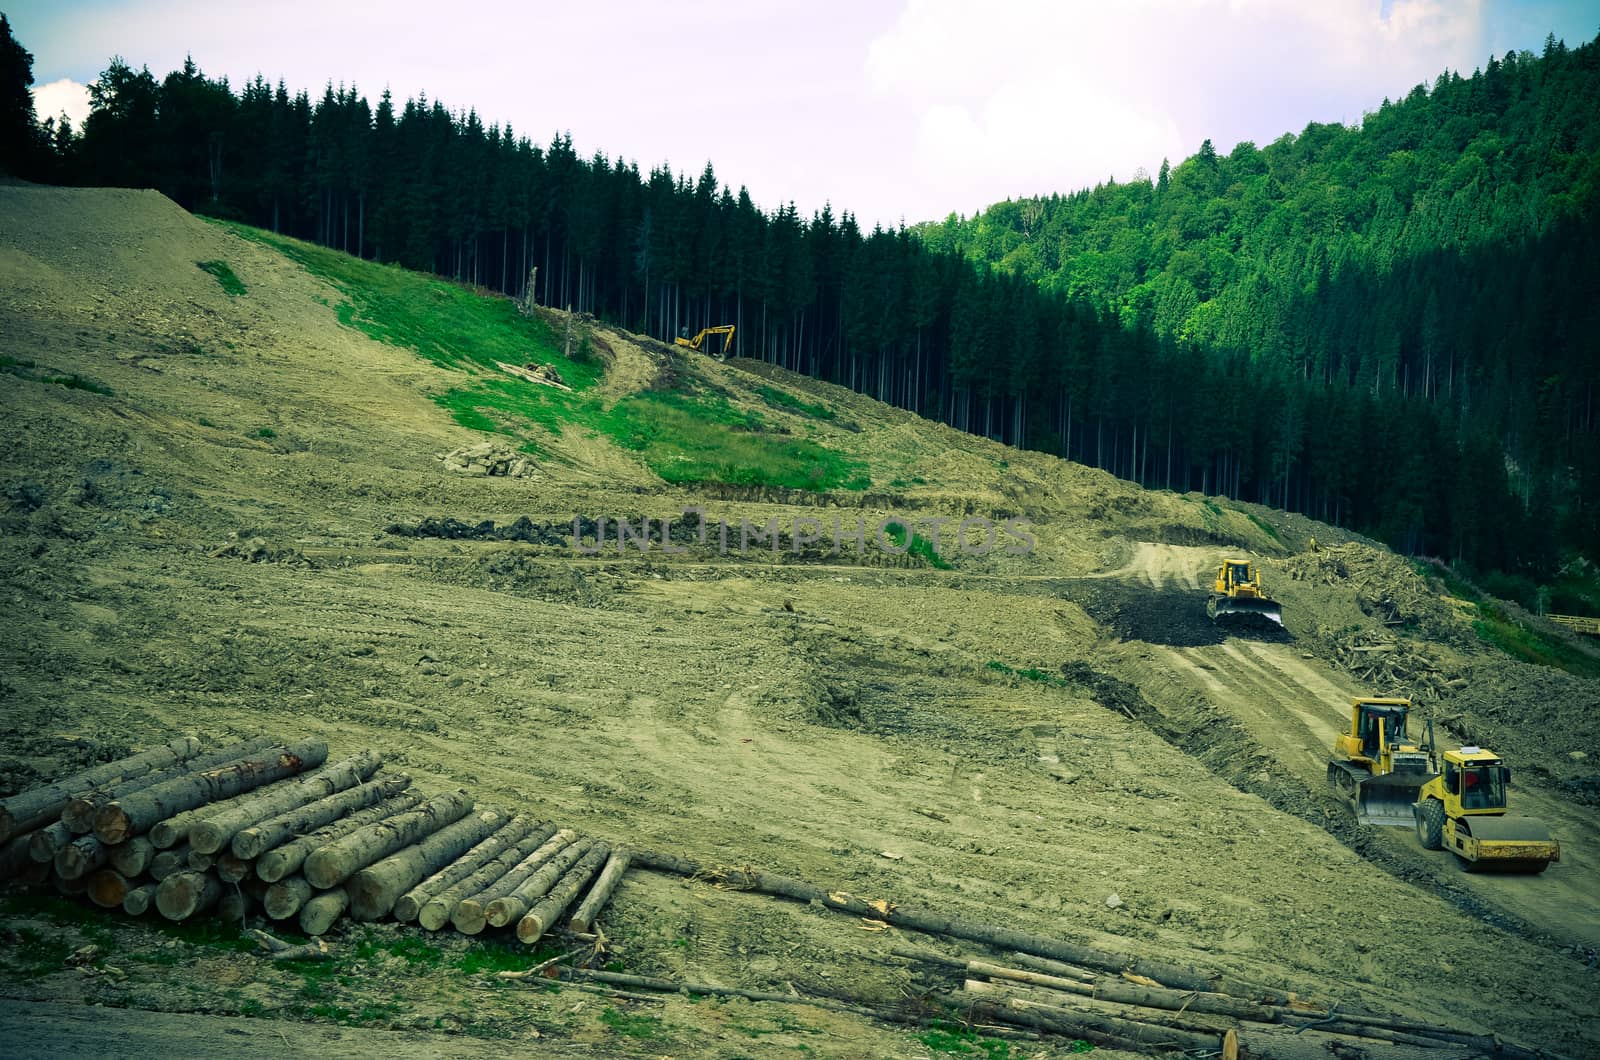 Deforestation environmental problem, forest destroyed for building resort by kimbo-bo